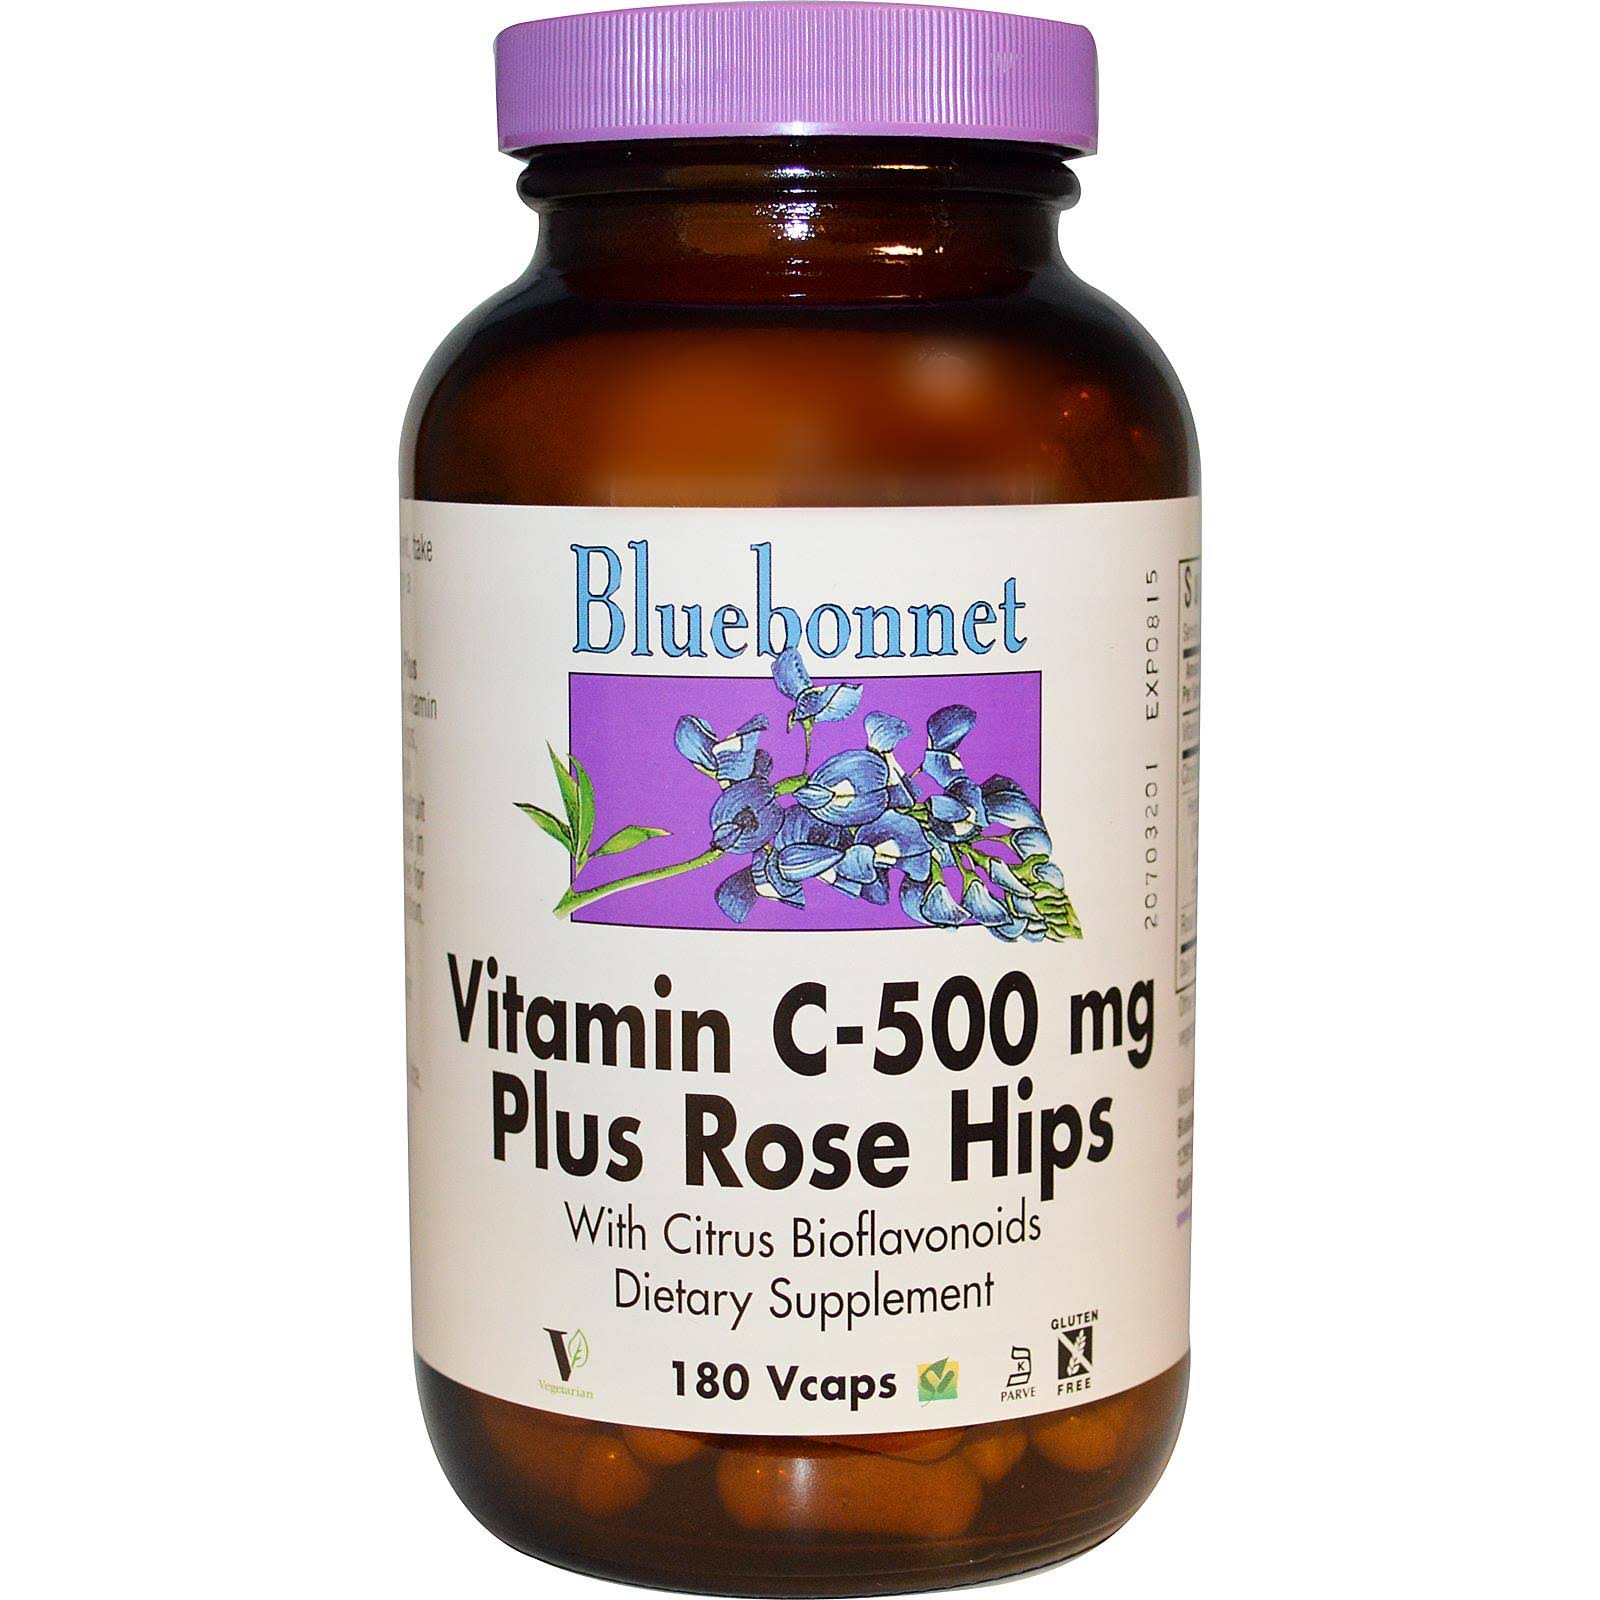 BlueBonnet Vitamin C-500 mg Plus Rosehips - 180 Vcaps